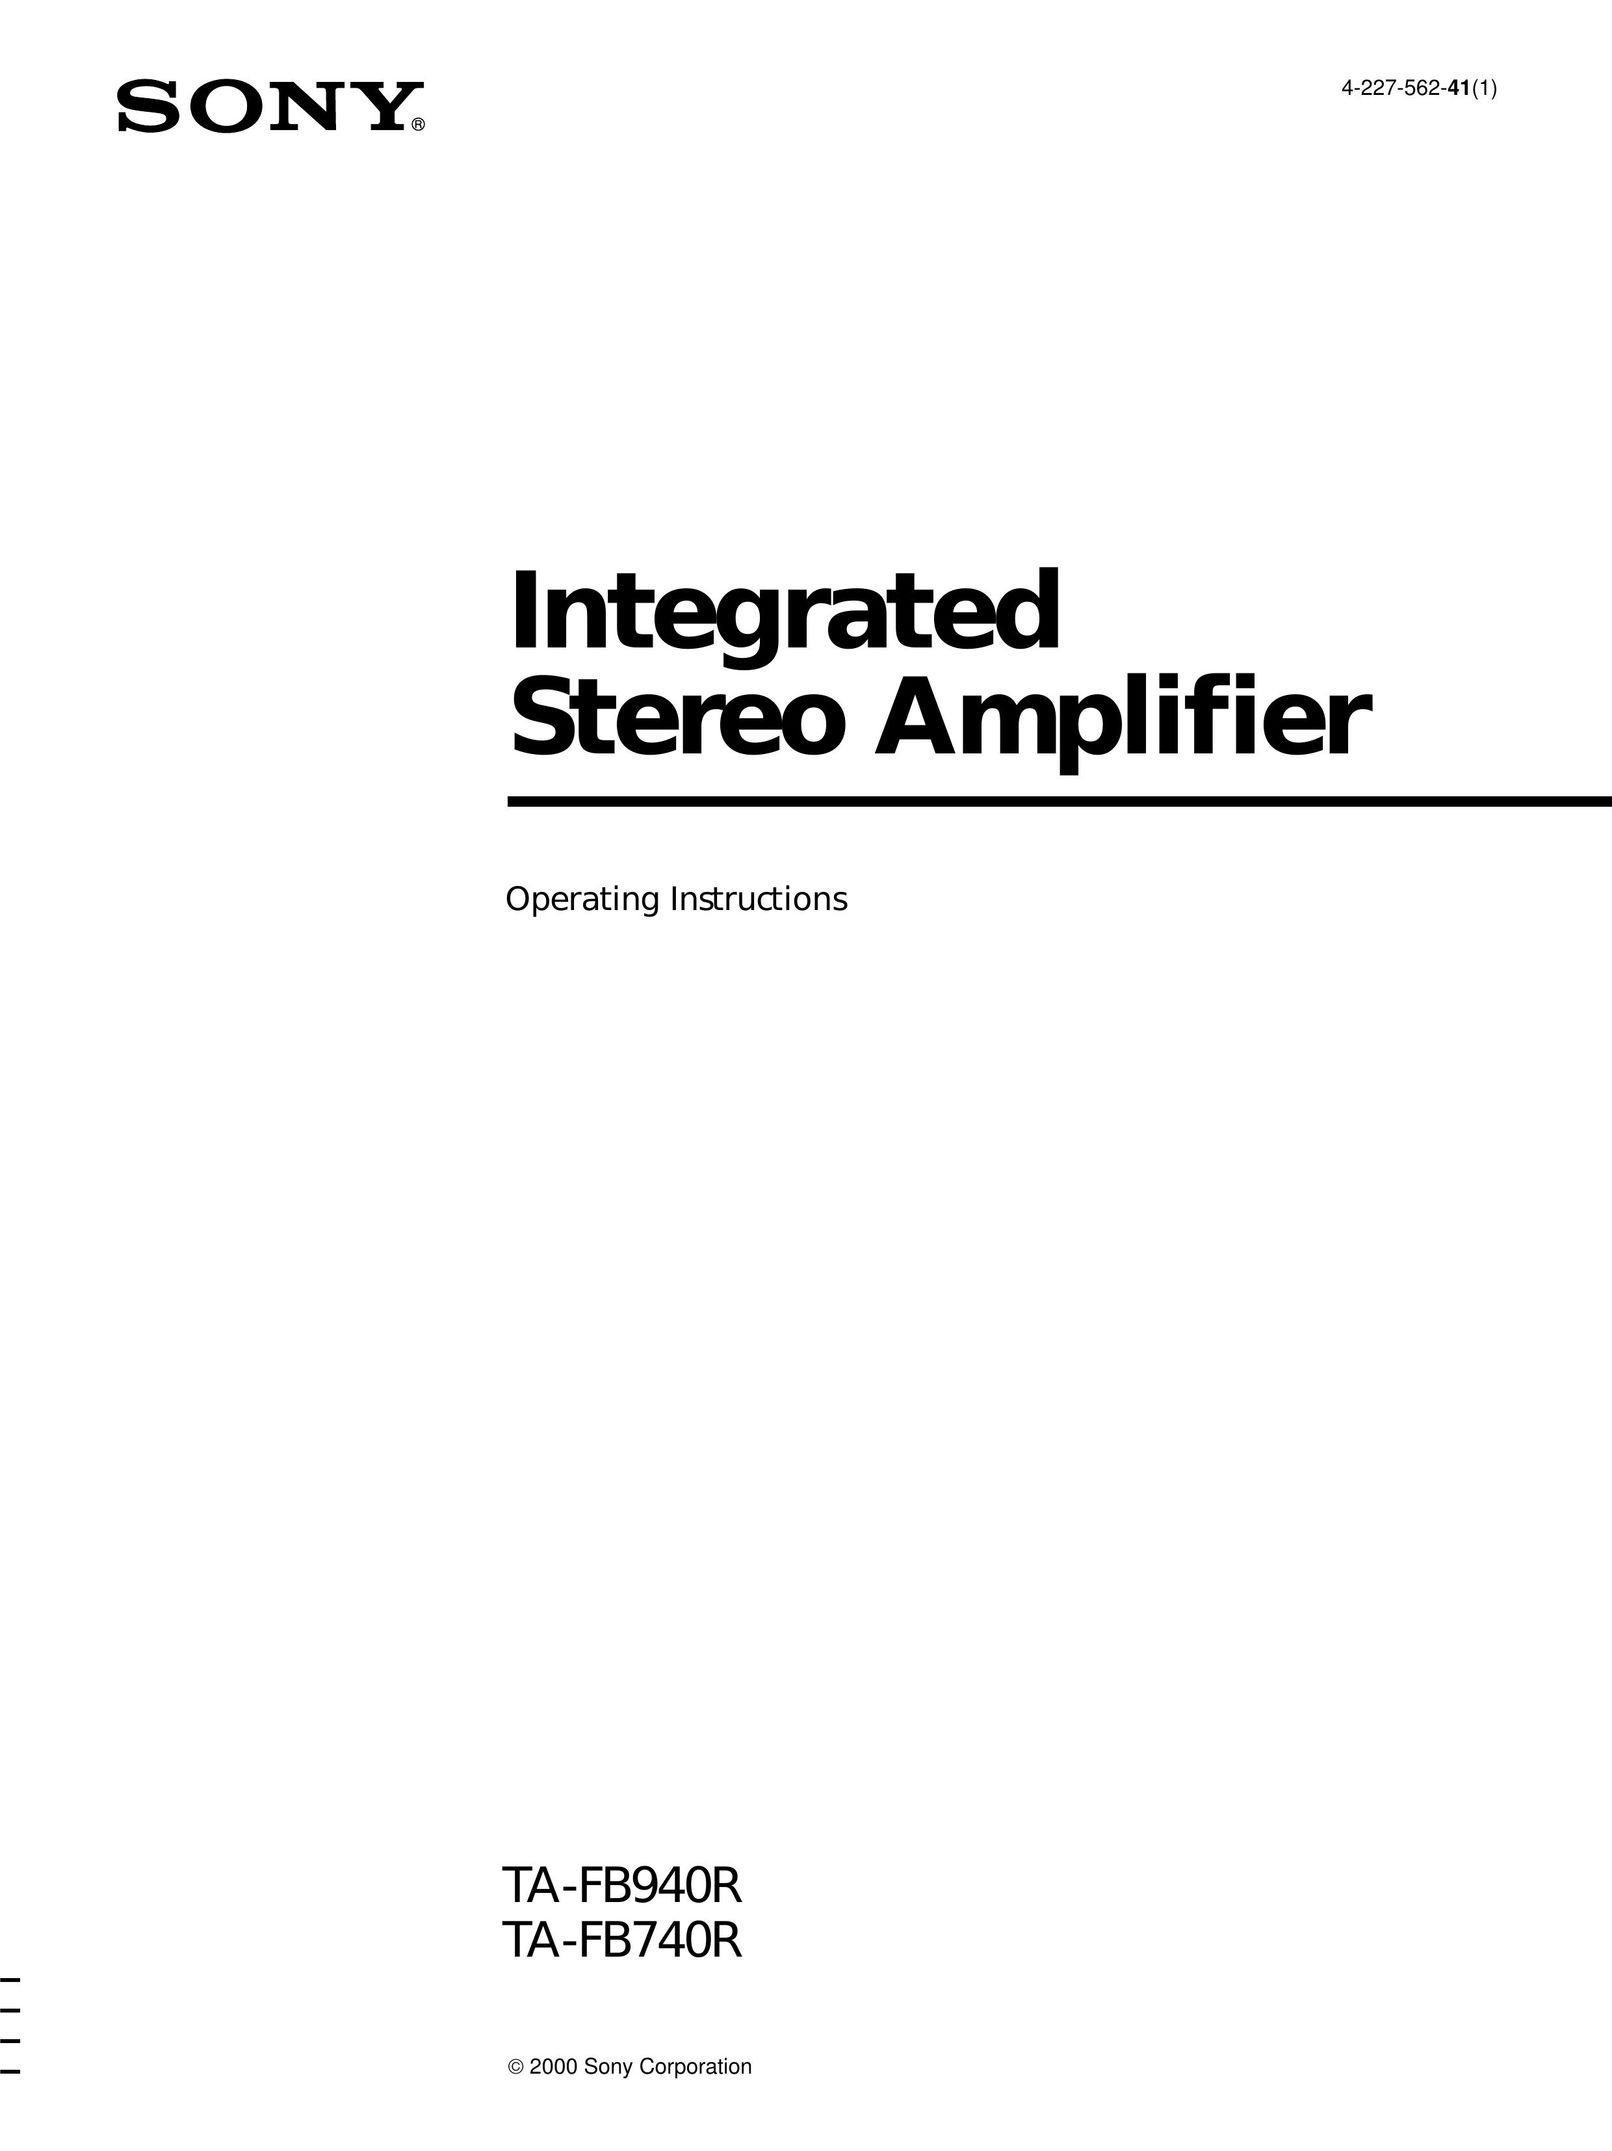 Sony TA-FB940R Stereo Amplifier User Manual